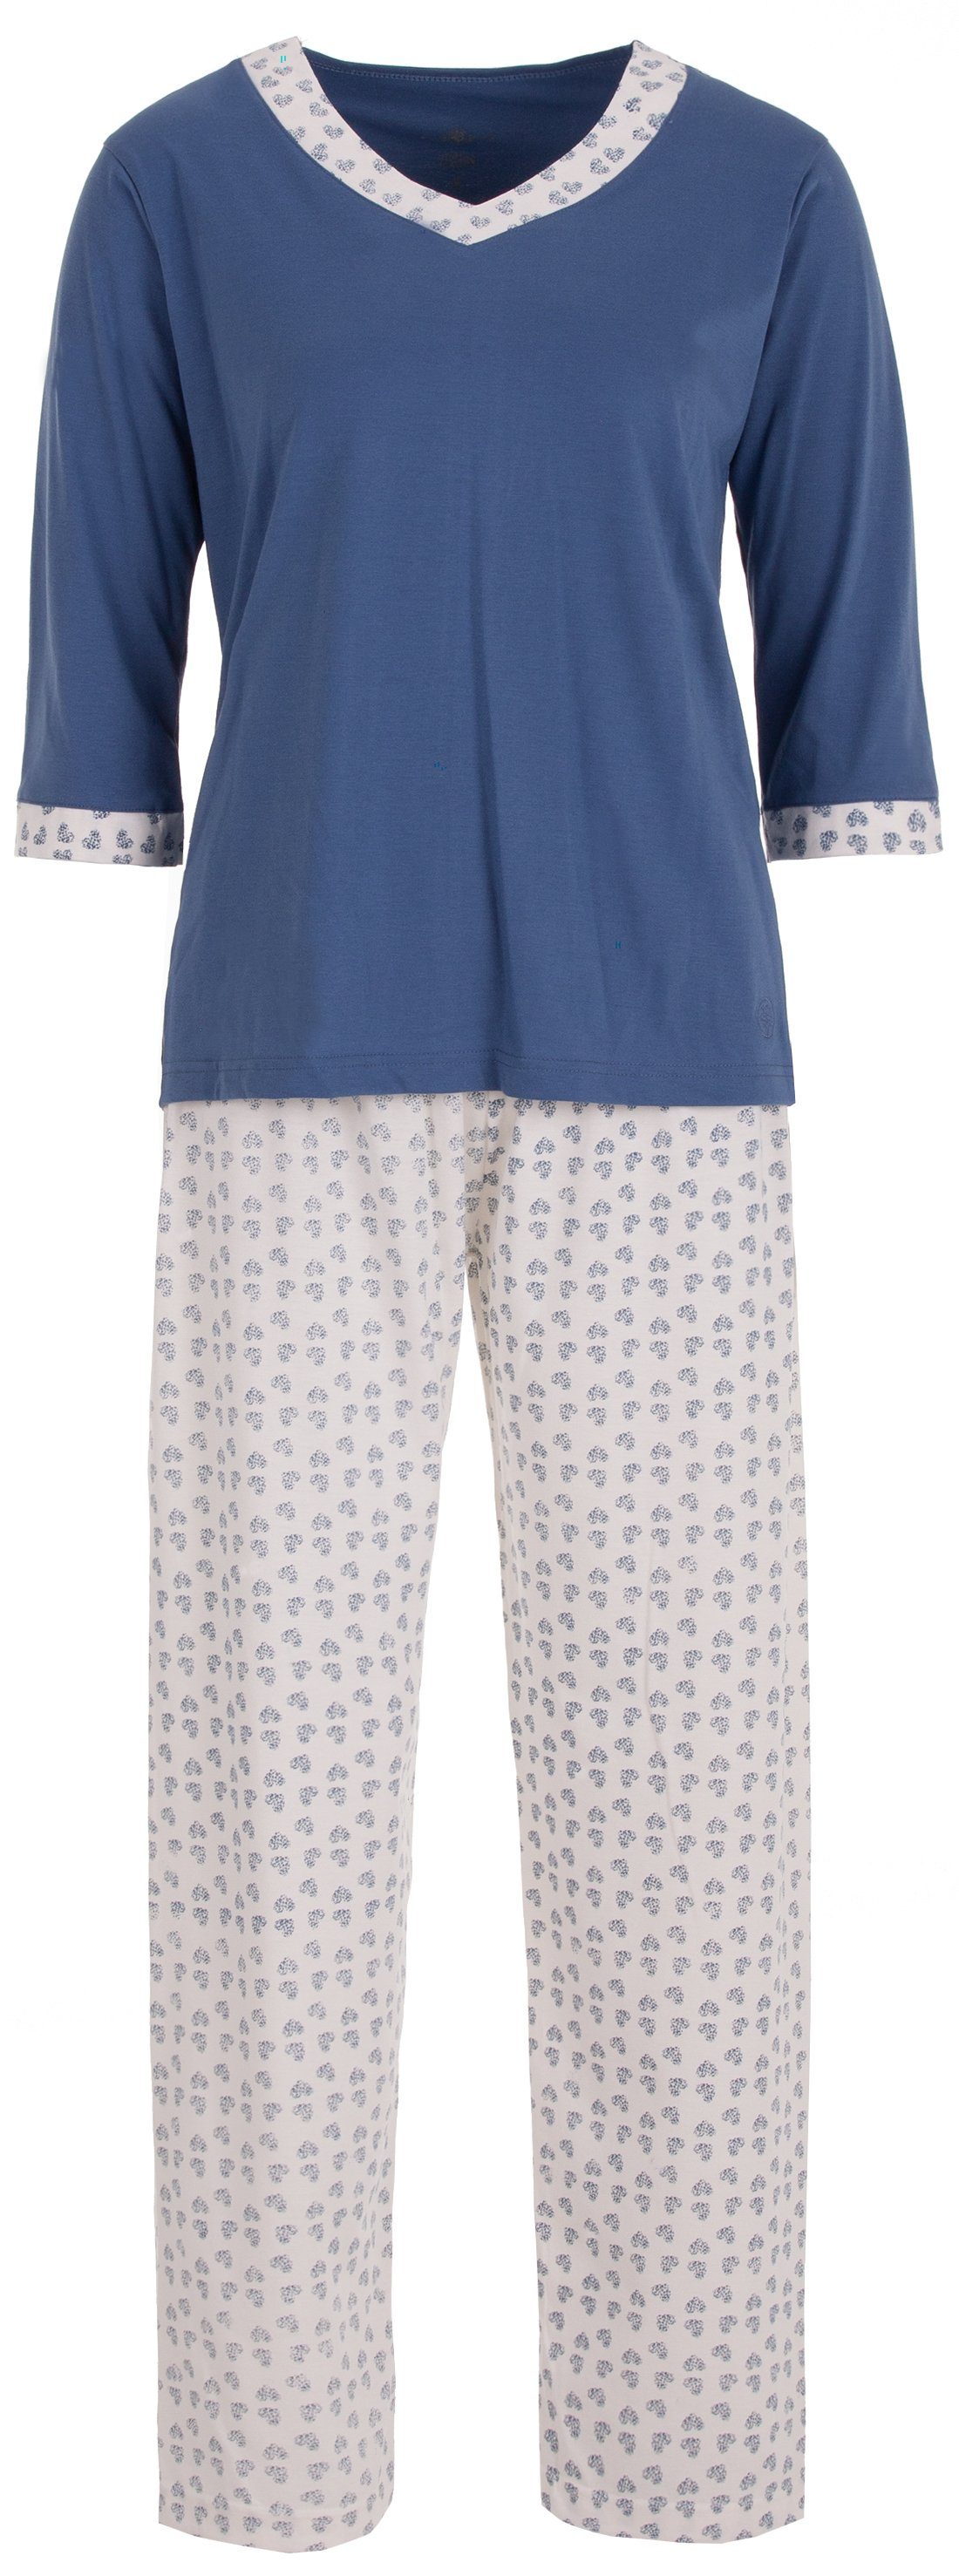 zeitlos Schlafanzug Pyjama Set 3/4 Arm - Heart blau